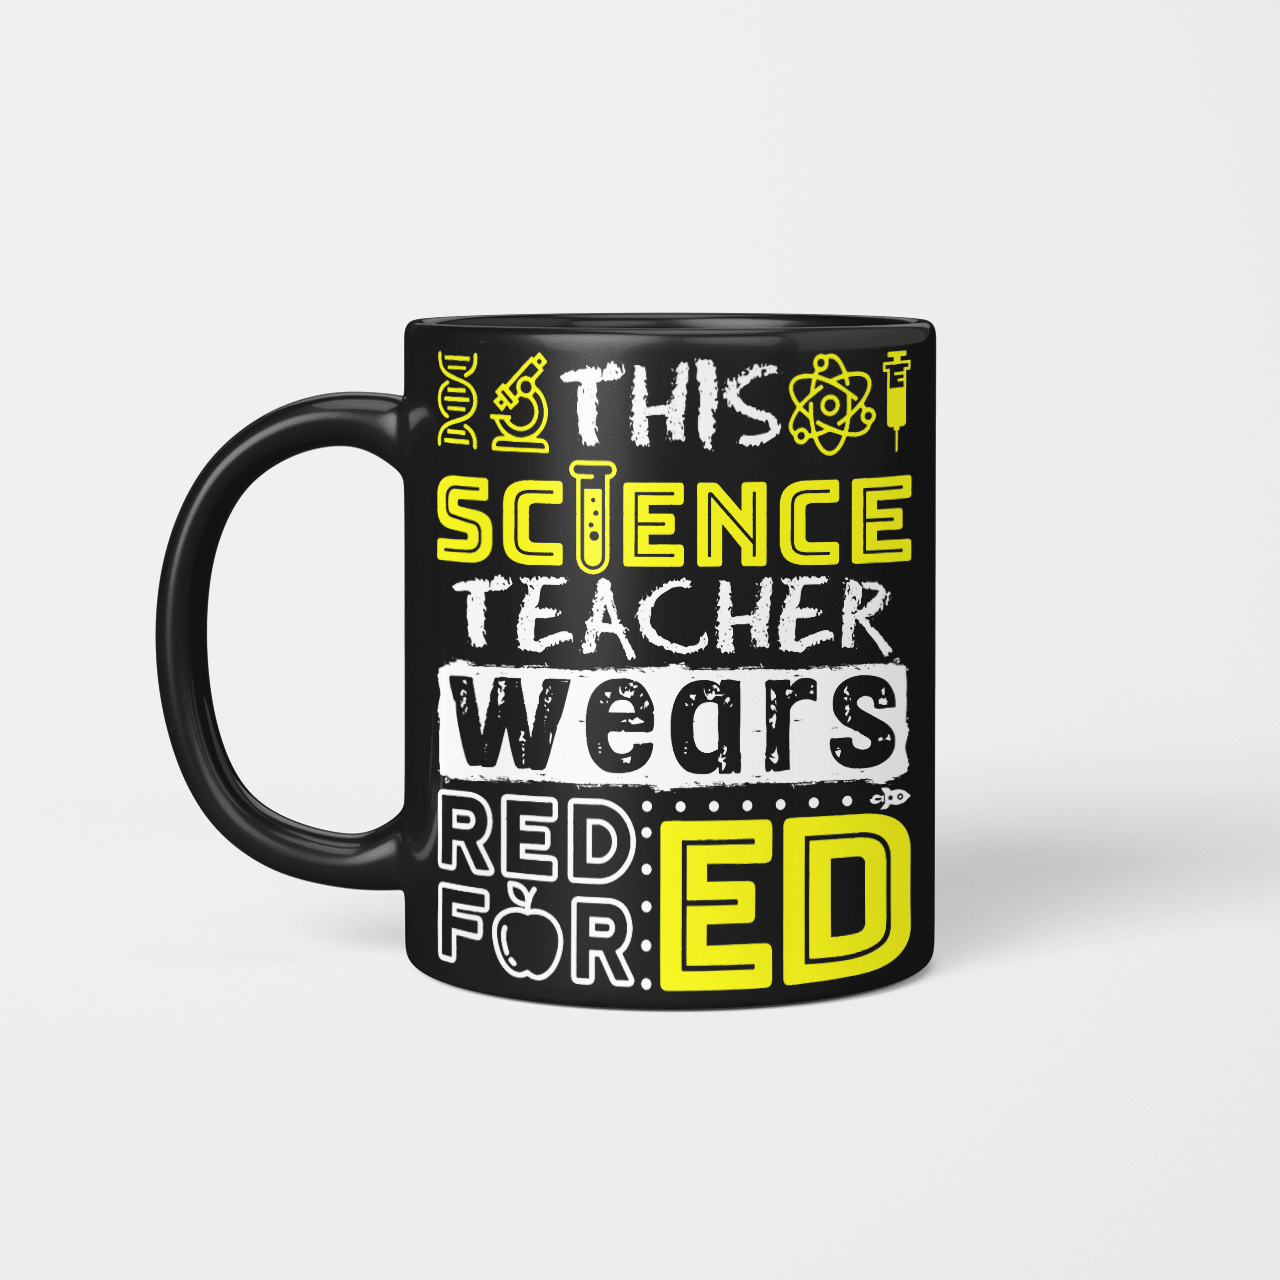 This Science Teacher Scn